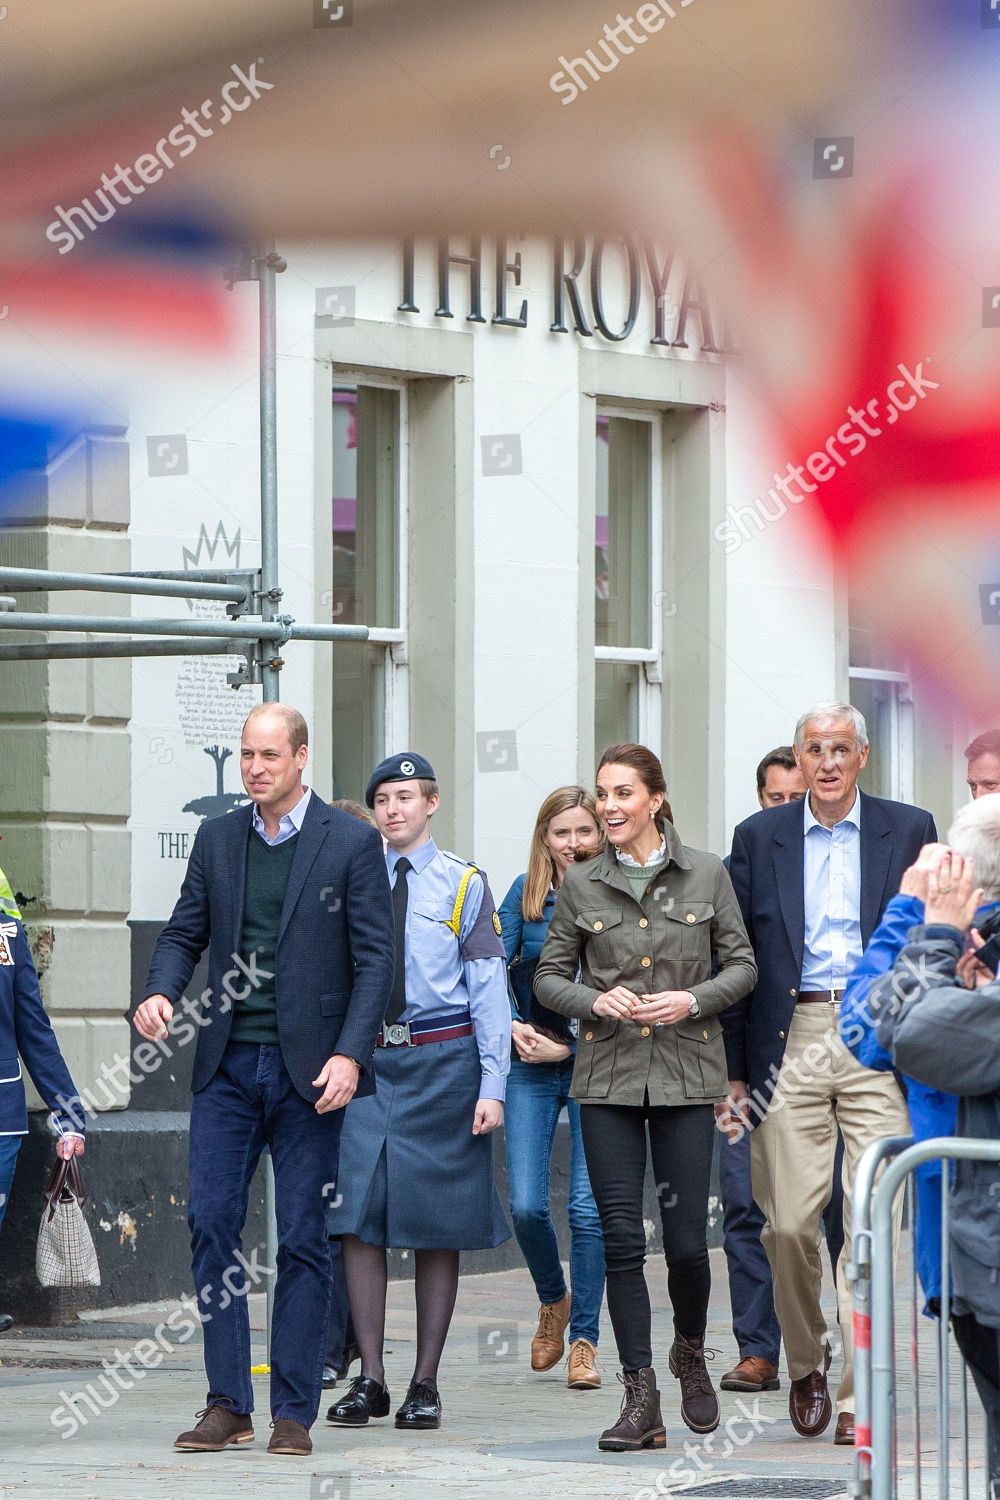 prince-william-and-catherine-duchess-of-cambridge-visit-to-keswick-uk-shutterstock-editorial-10302287d.jpg